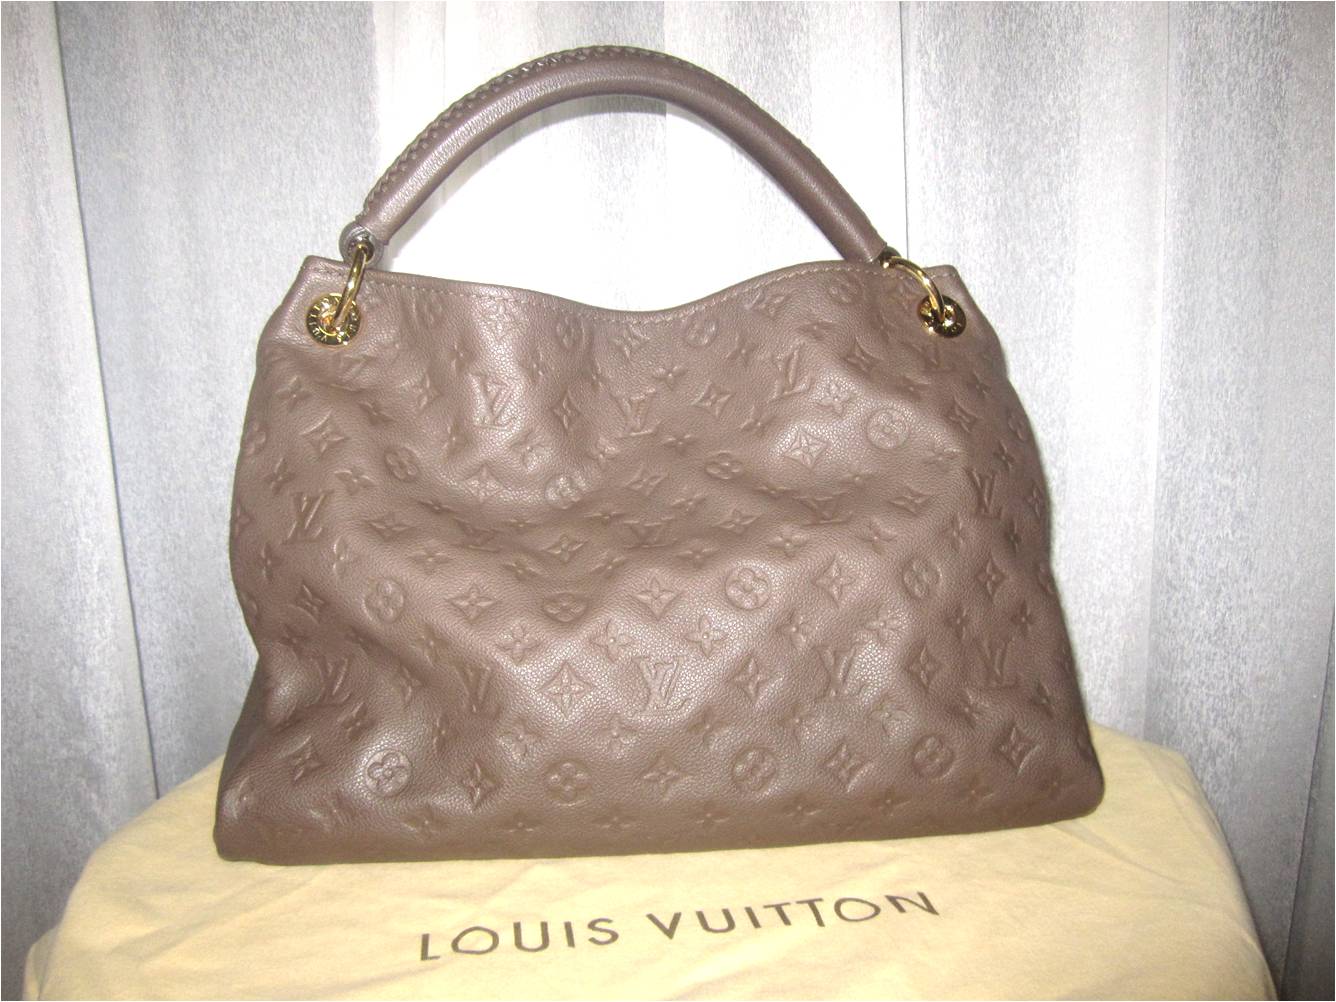 The Bags Affairs ~ Satisfy your lust for designer bags: LOUIS VUITTON MONOGRAM EMPREINTE ARTSY ...